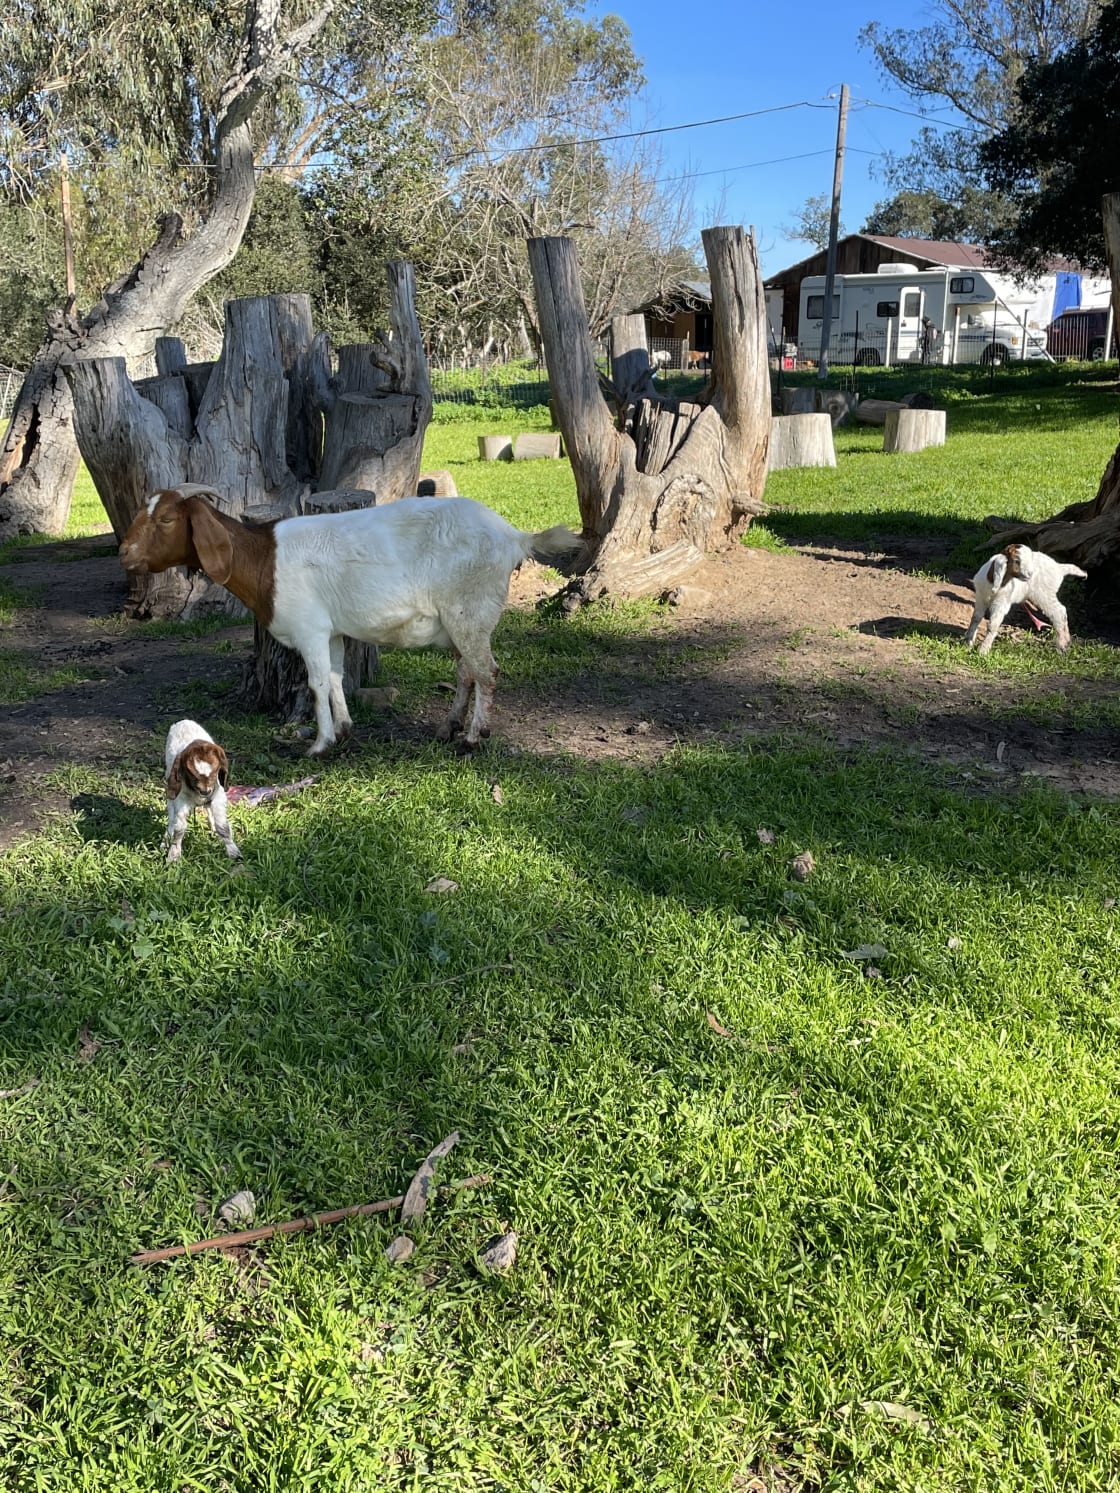 Goats again. Lots of goats here. 